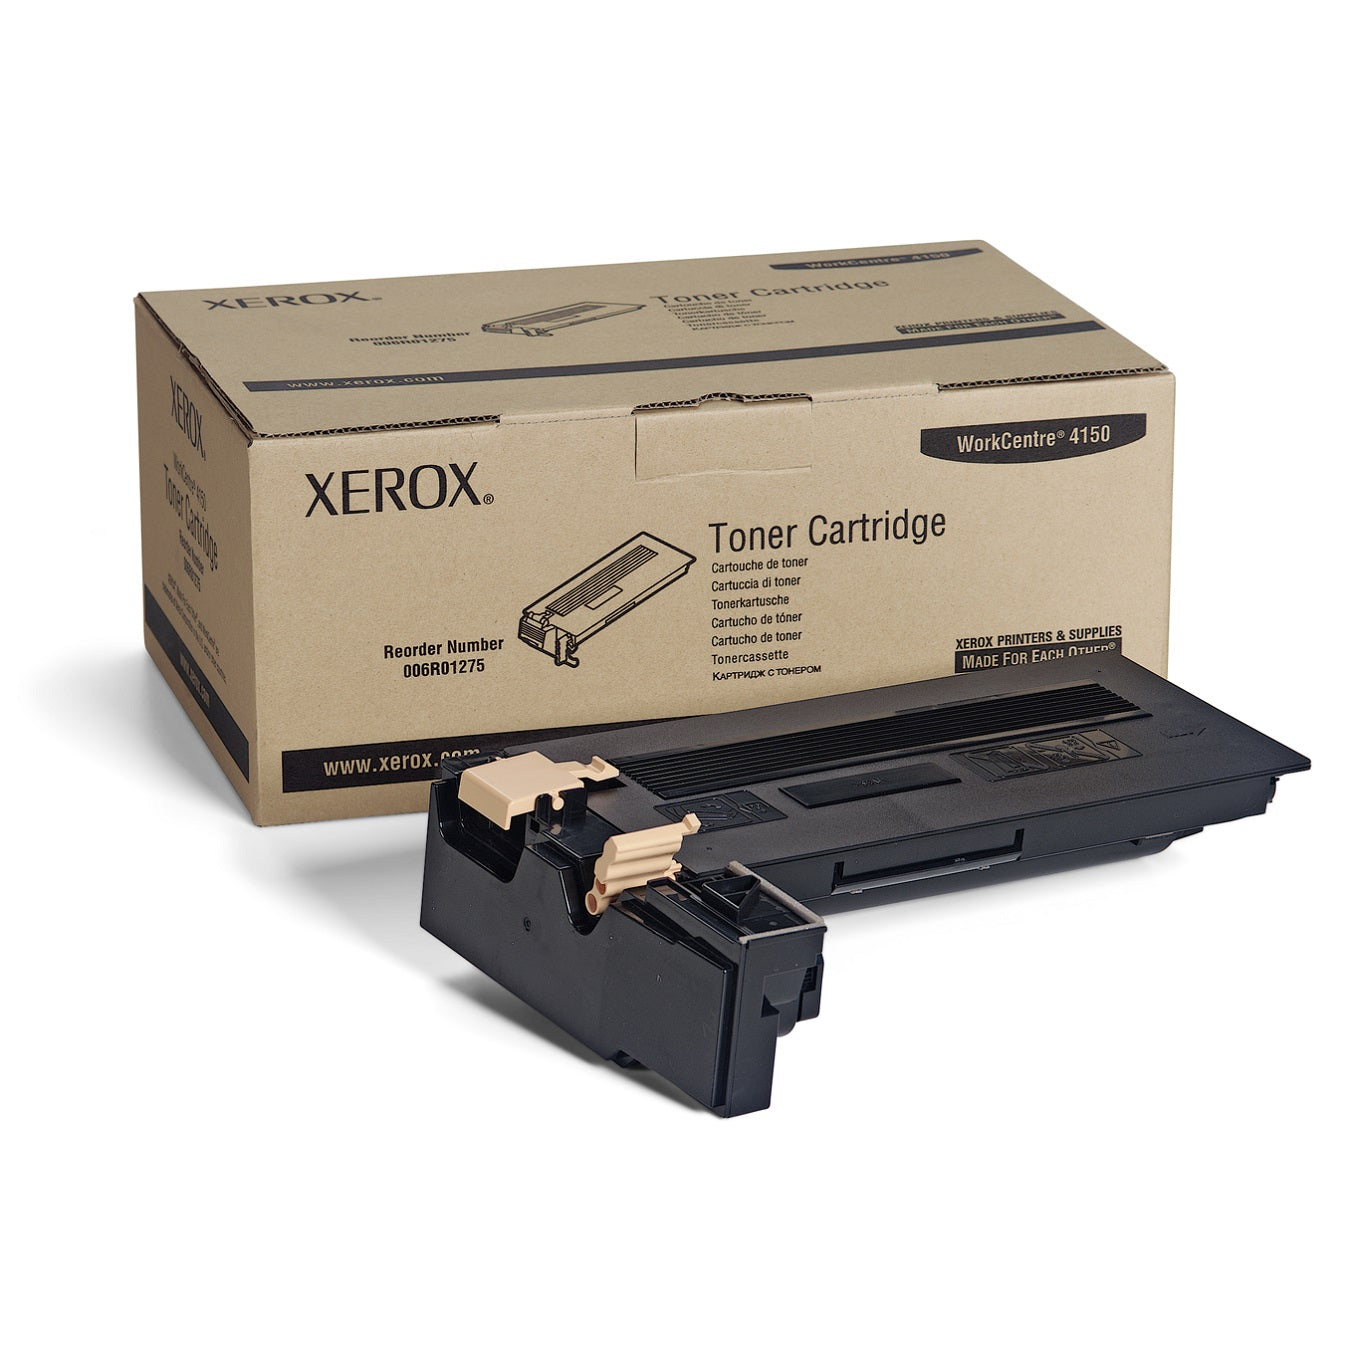 Absolute Toner Genuine Xerox 006R01275 Black Toner Cartridge For WorkCentre 4150 Original Xerox Cartridges